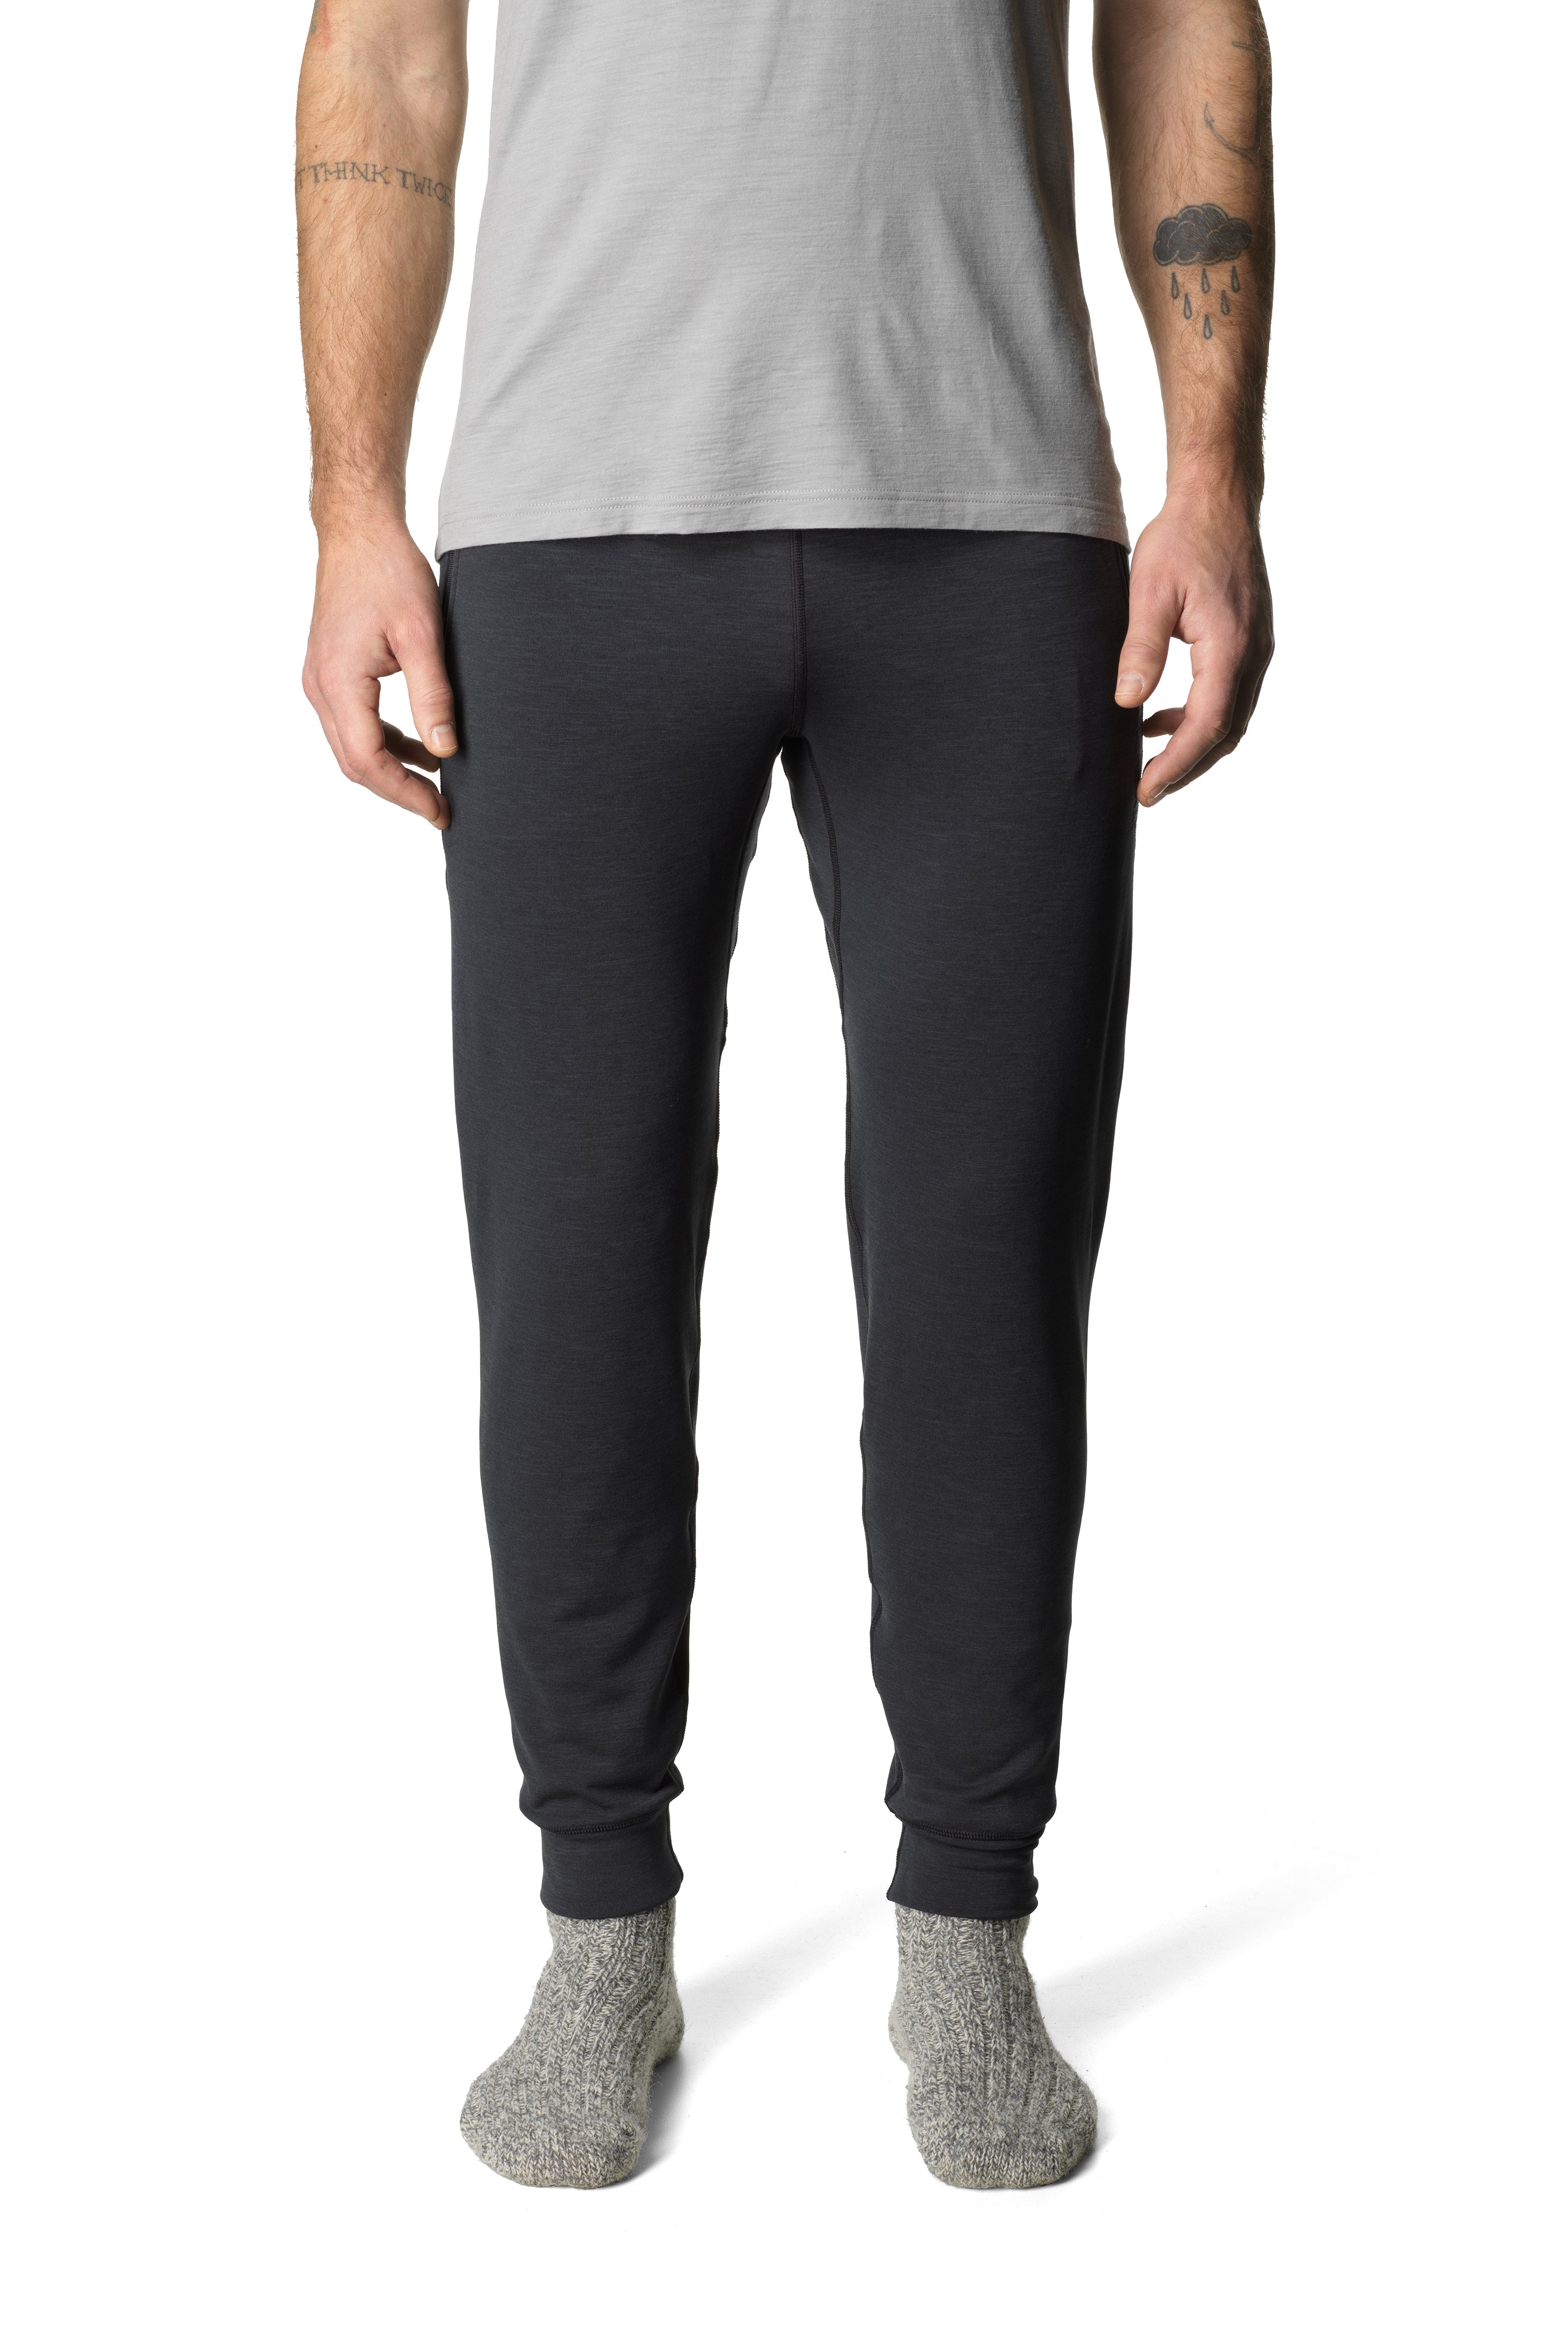 Houdini M's Outright Pants - Velo com certificação Bluesign®. – Weekendbee  - premium sportswear